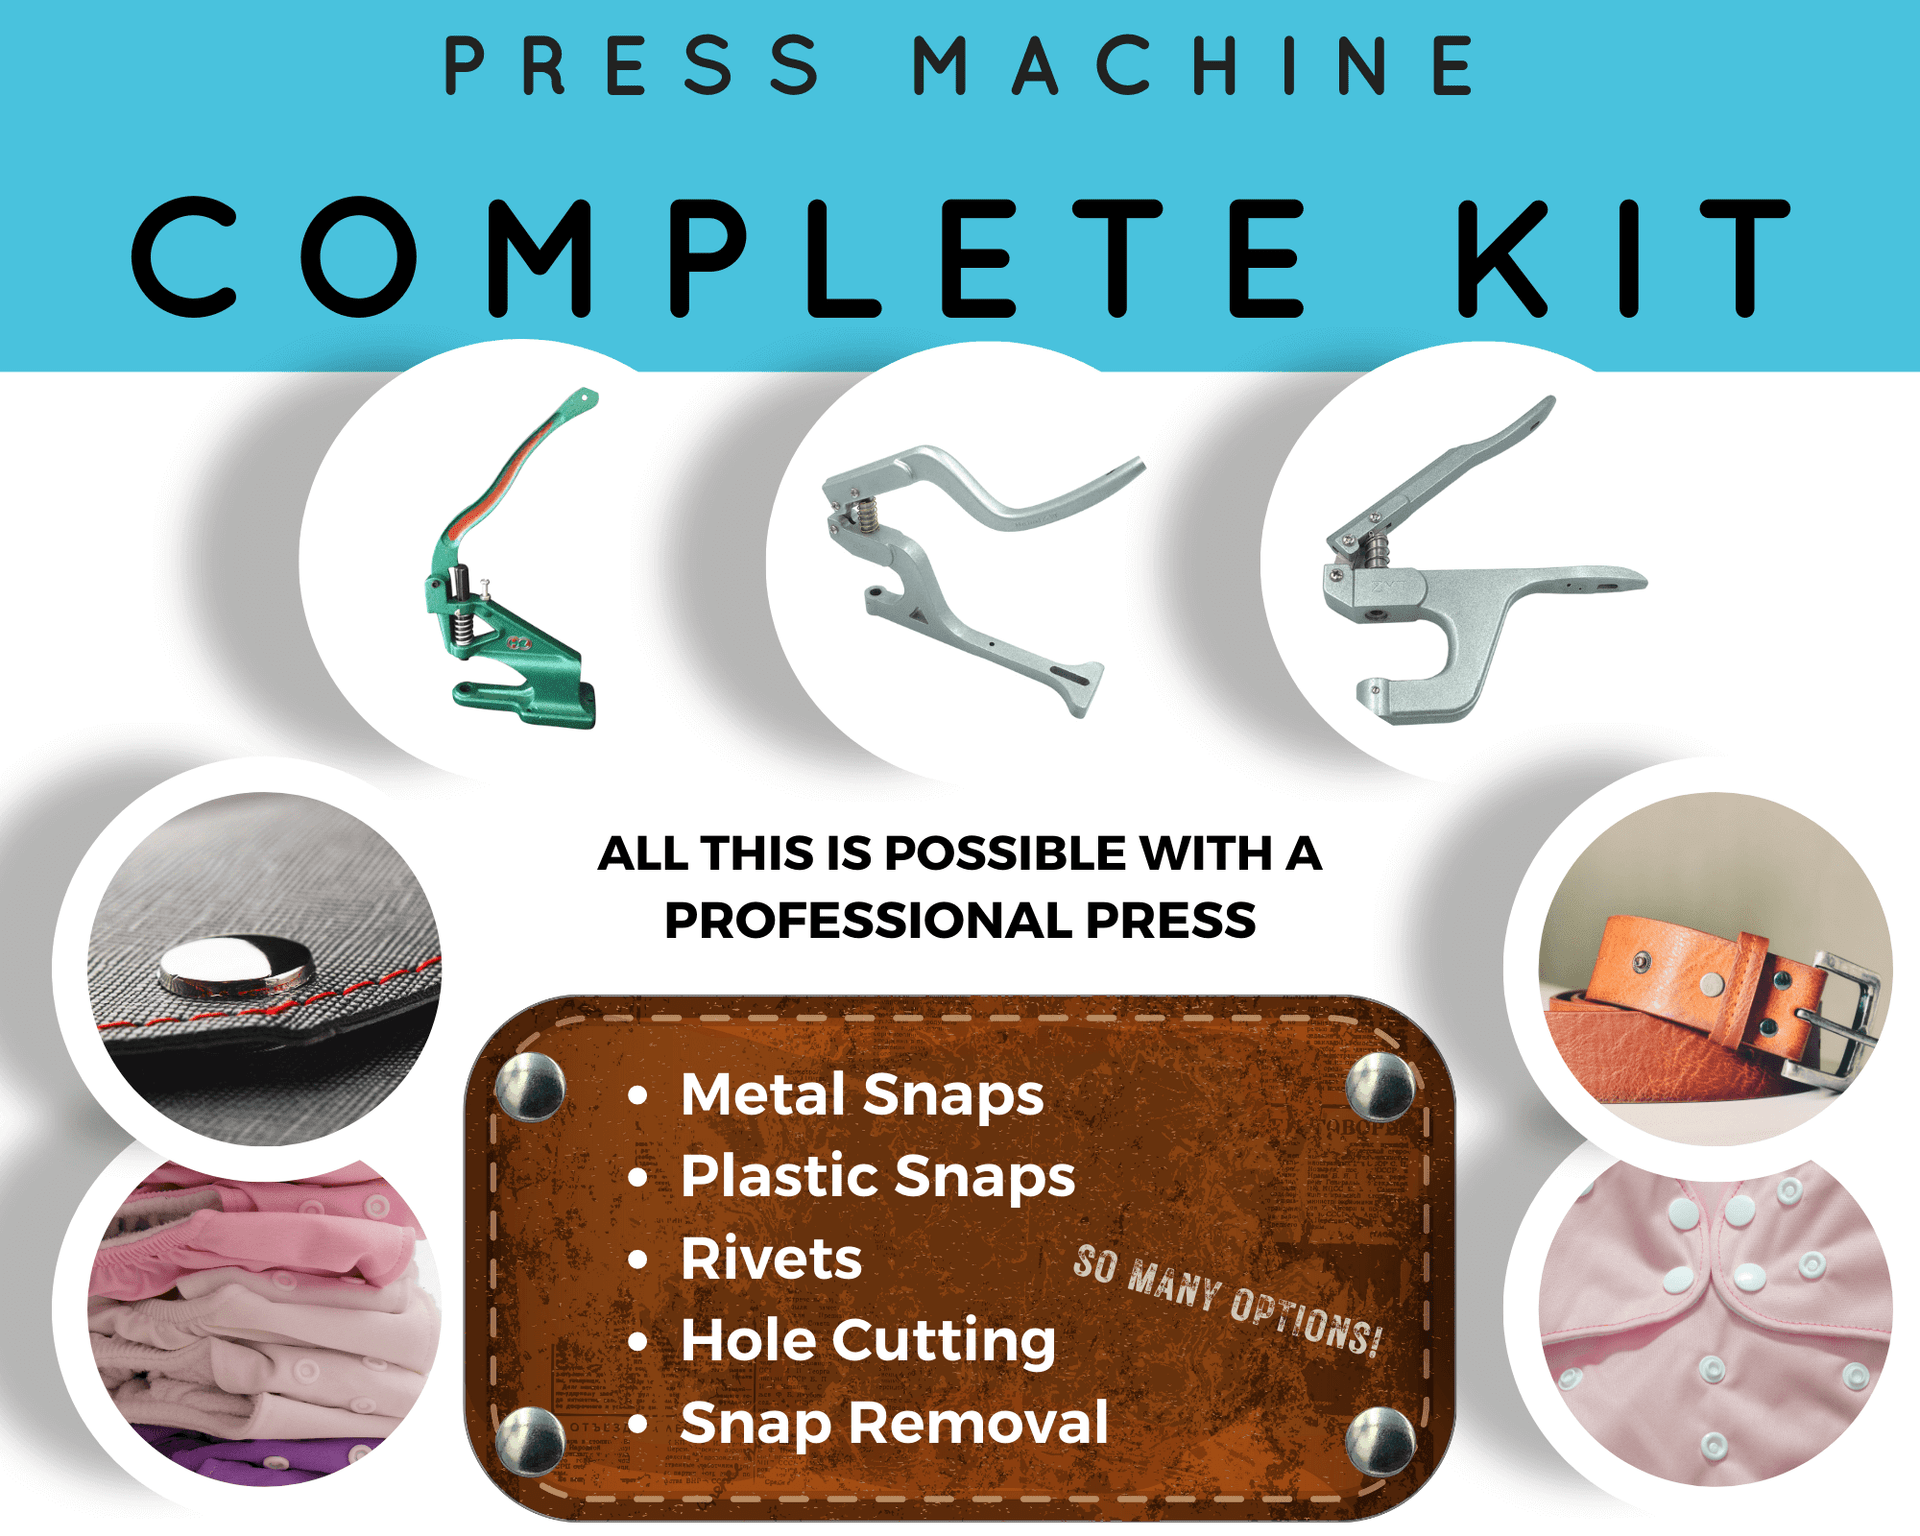 COMPLETE Kit for Plastic Snaps + Metal Snaps + Rivets